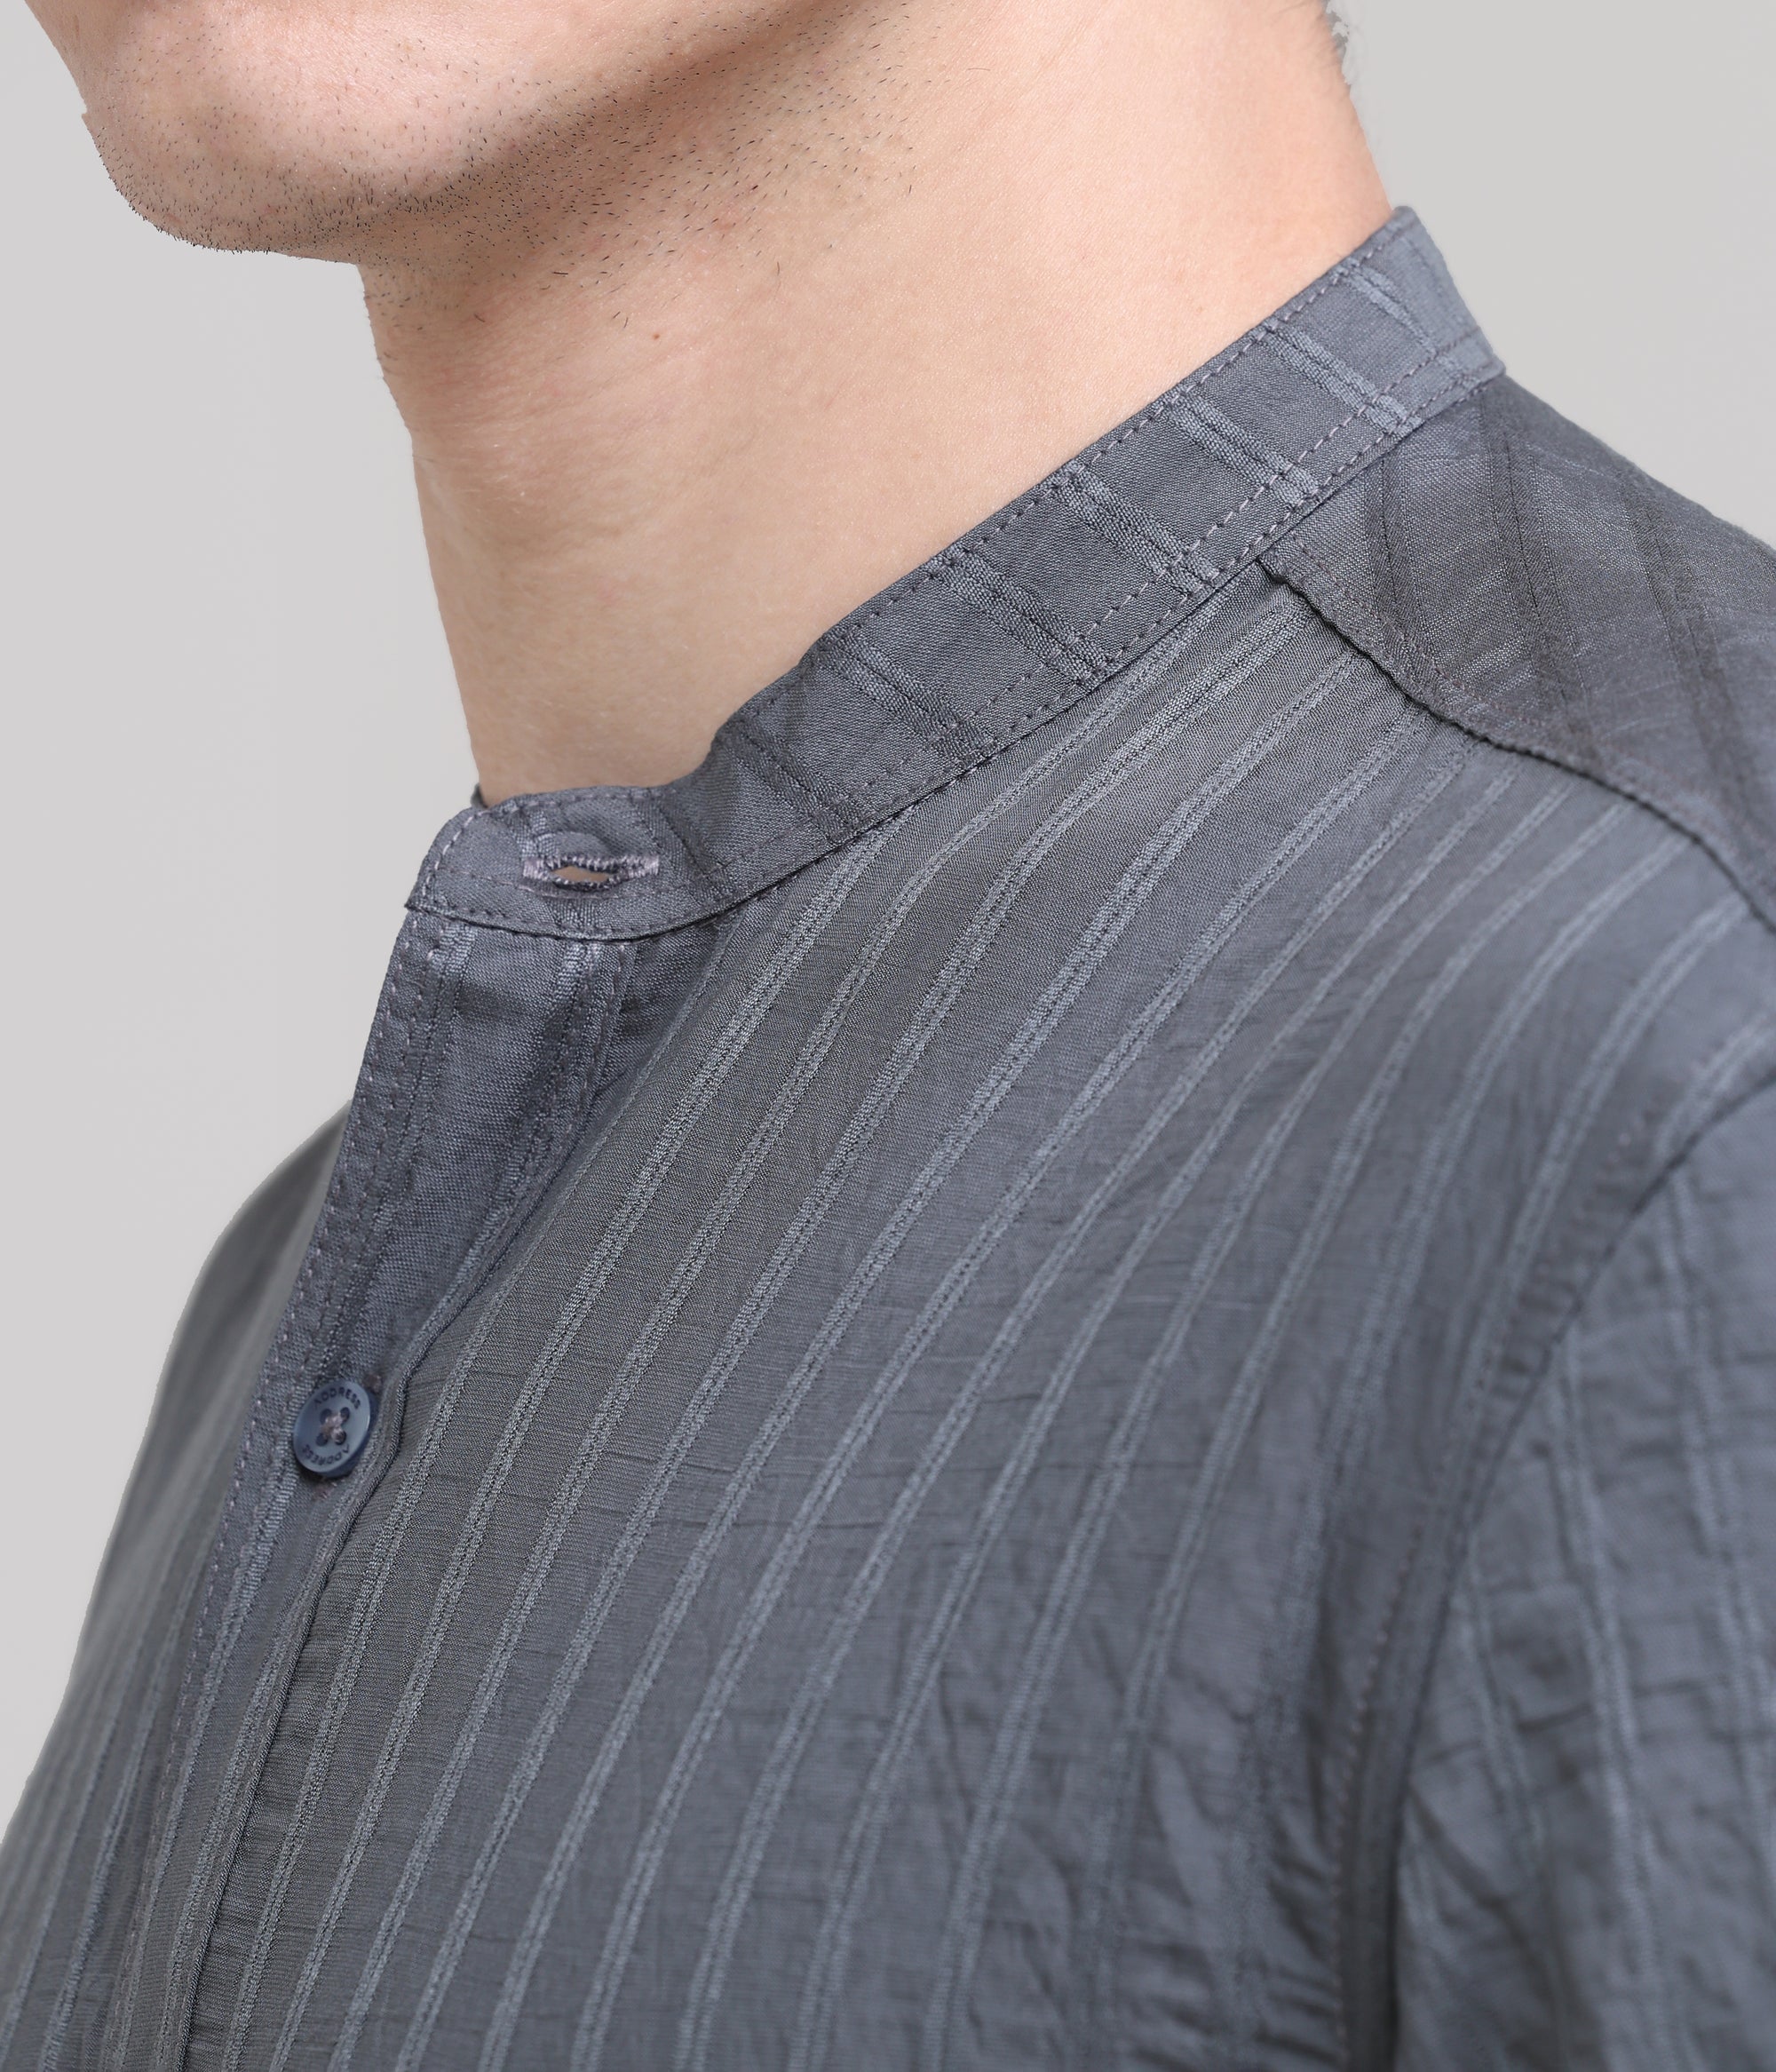 Steel Comfort: Solid Grey Regular Fit Half Sleeve Shirt